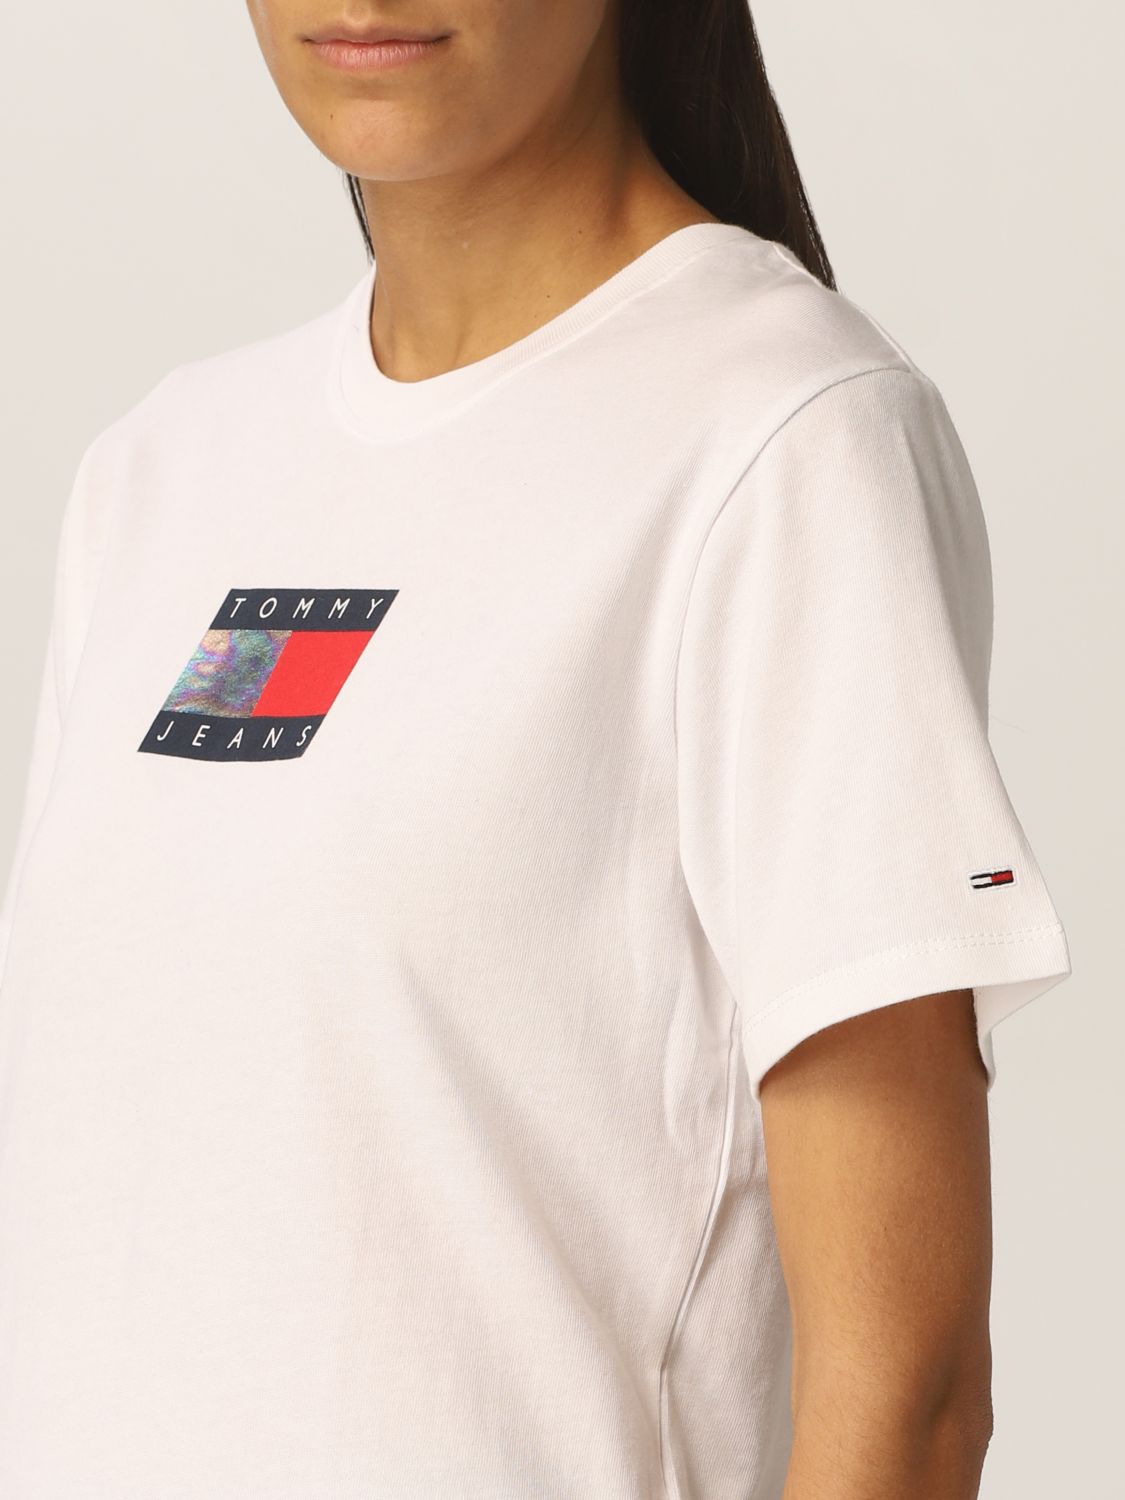 TOMMY HILFIGER: T-shirt women | T-Shirt Tommy Hilfiger Women White | T-Shirt Hilfiger